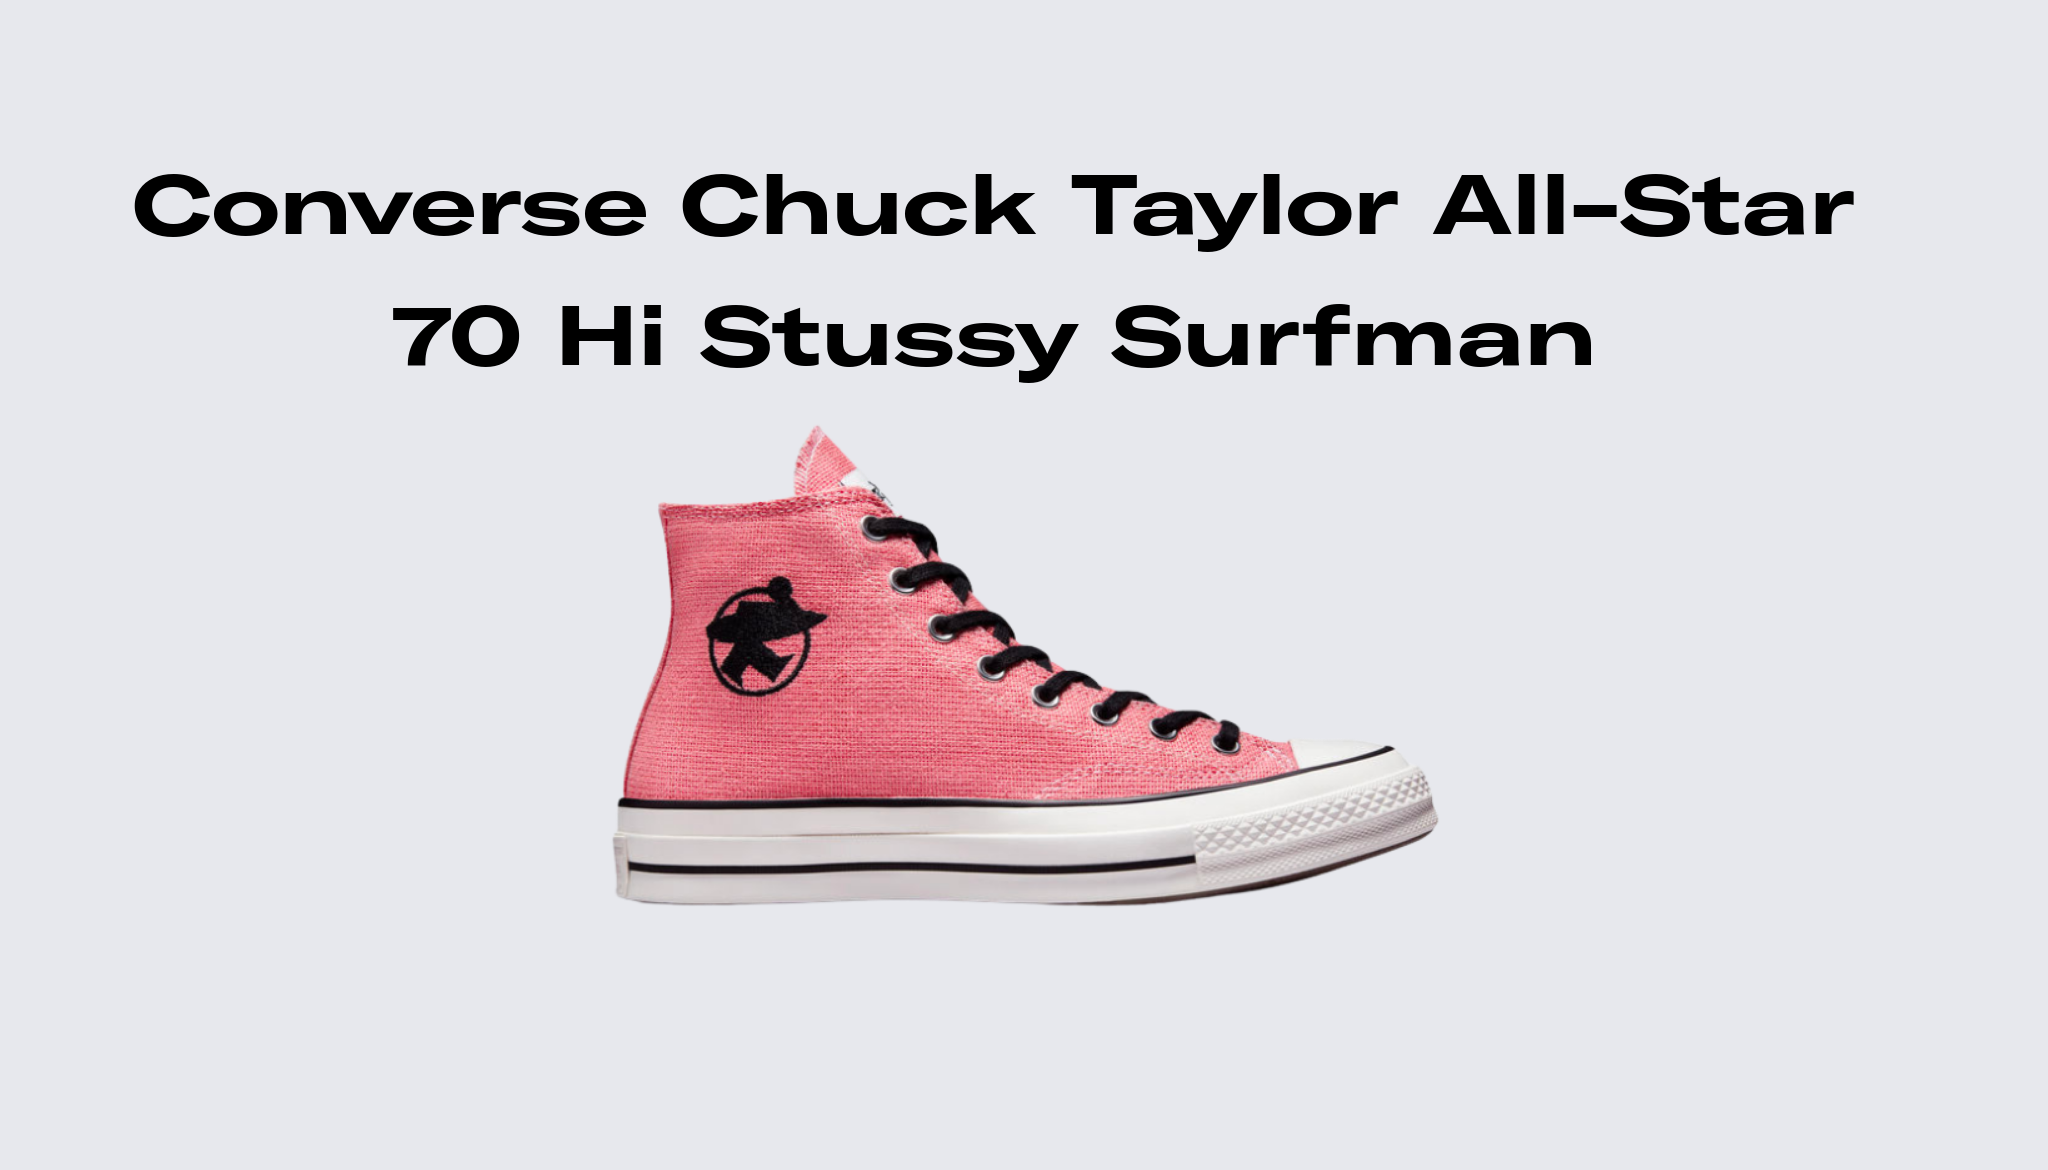 Converse Chuck Taylor All-Star 70 Hi Stussy Surfman Raffles and 